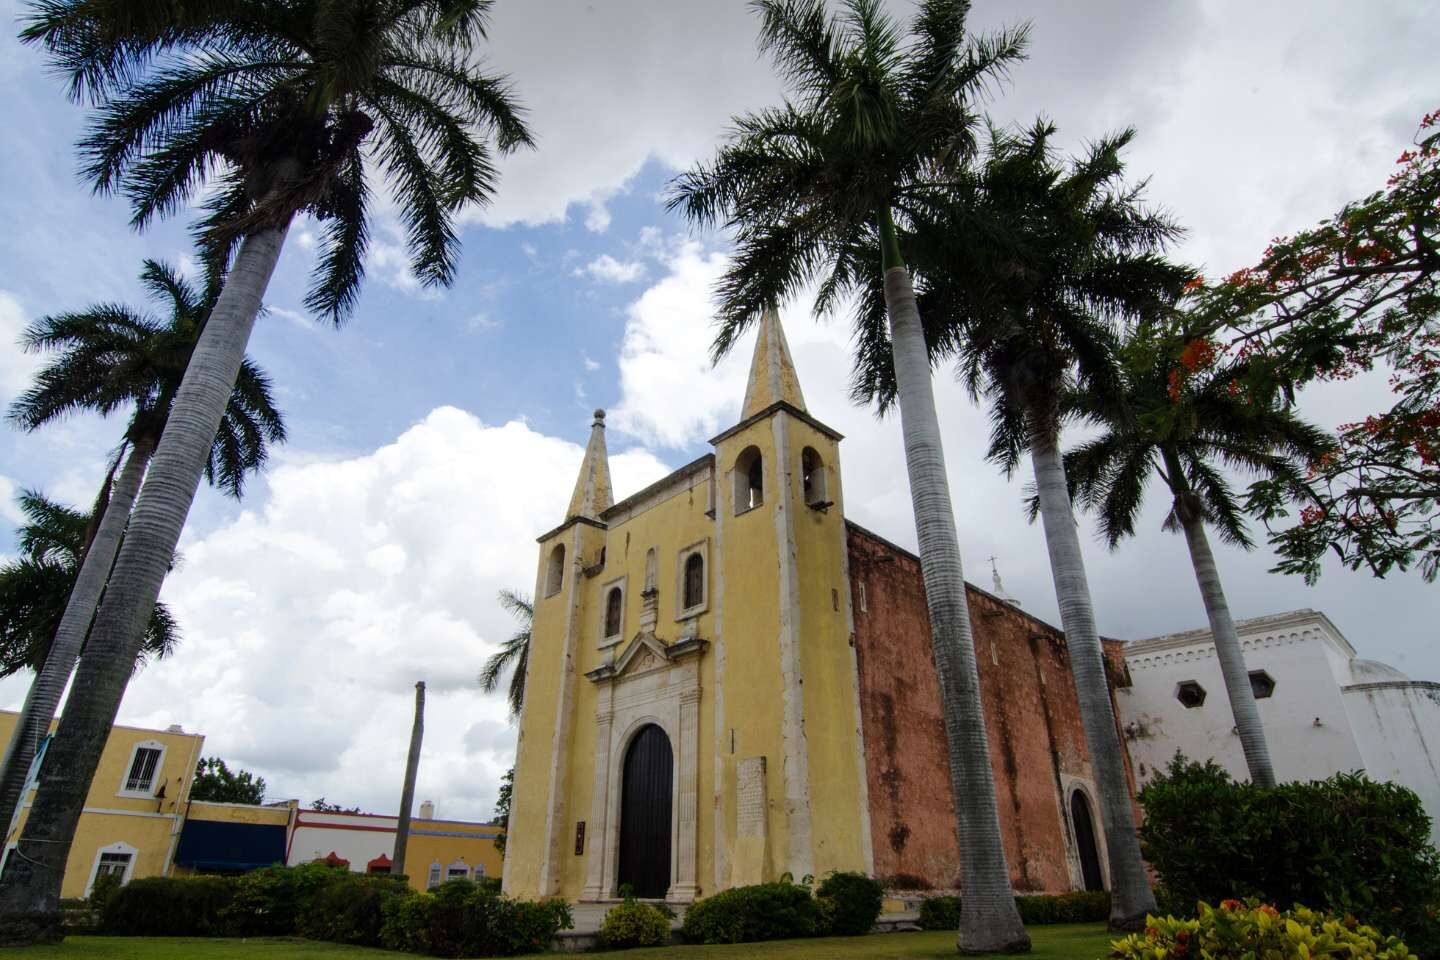 Popular church to visit in Merida, Mexico